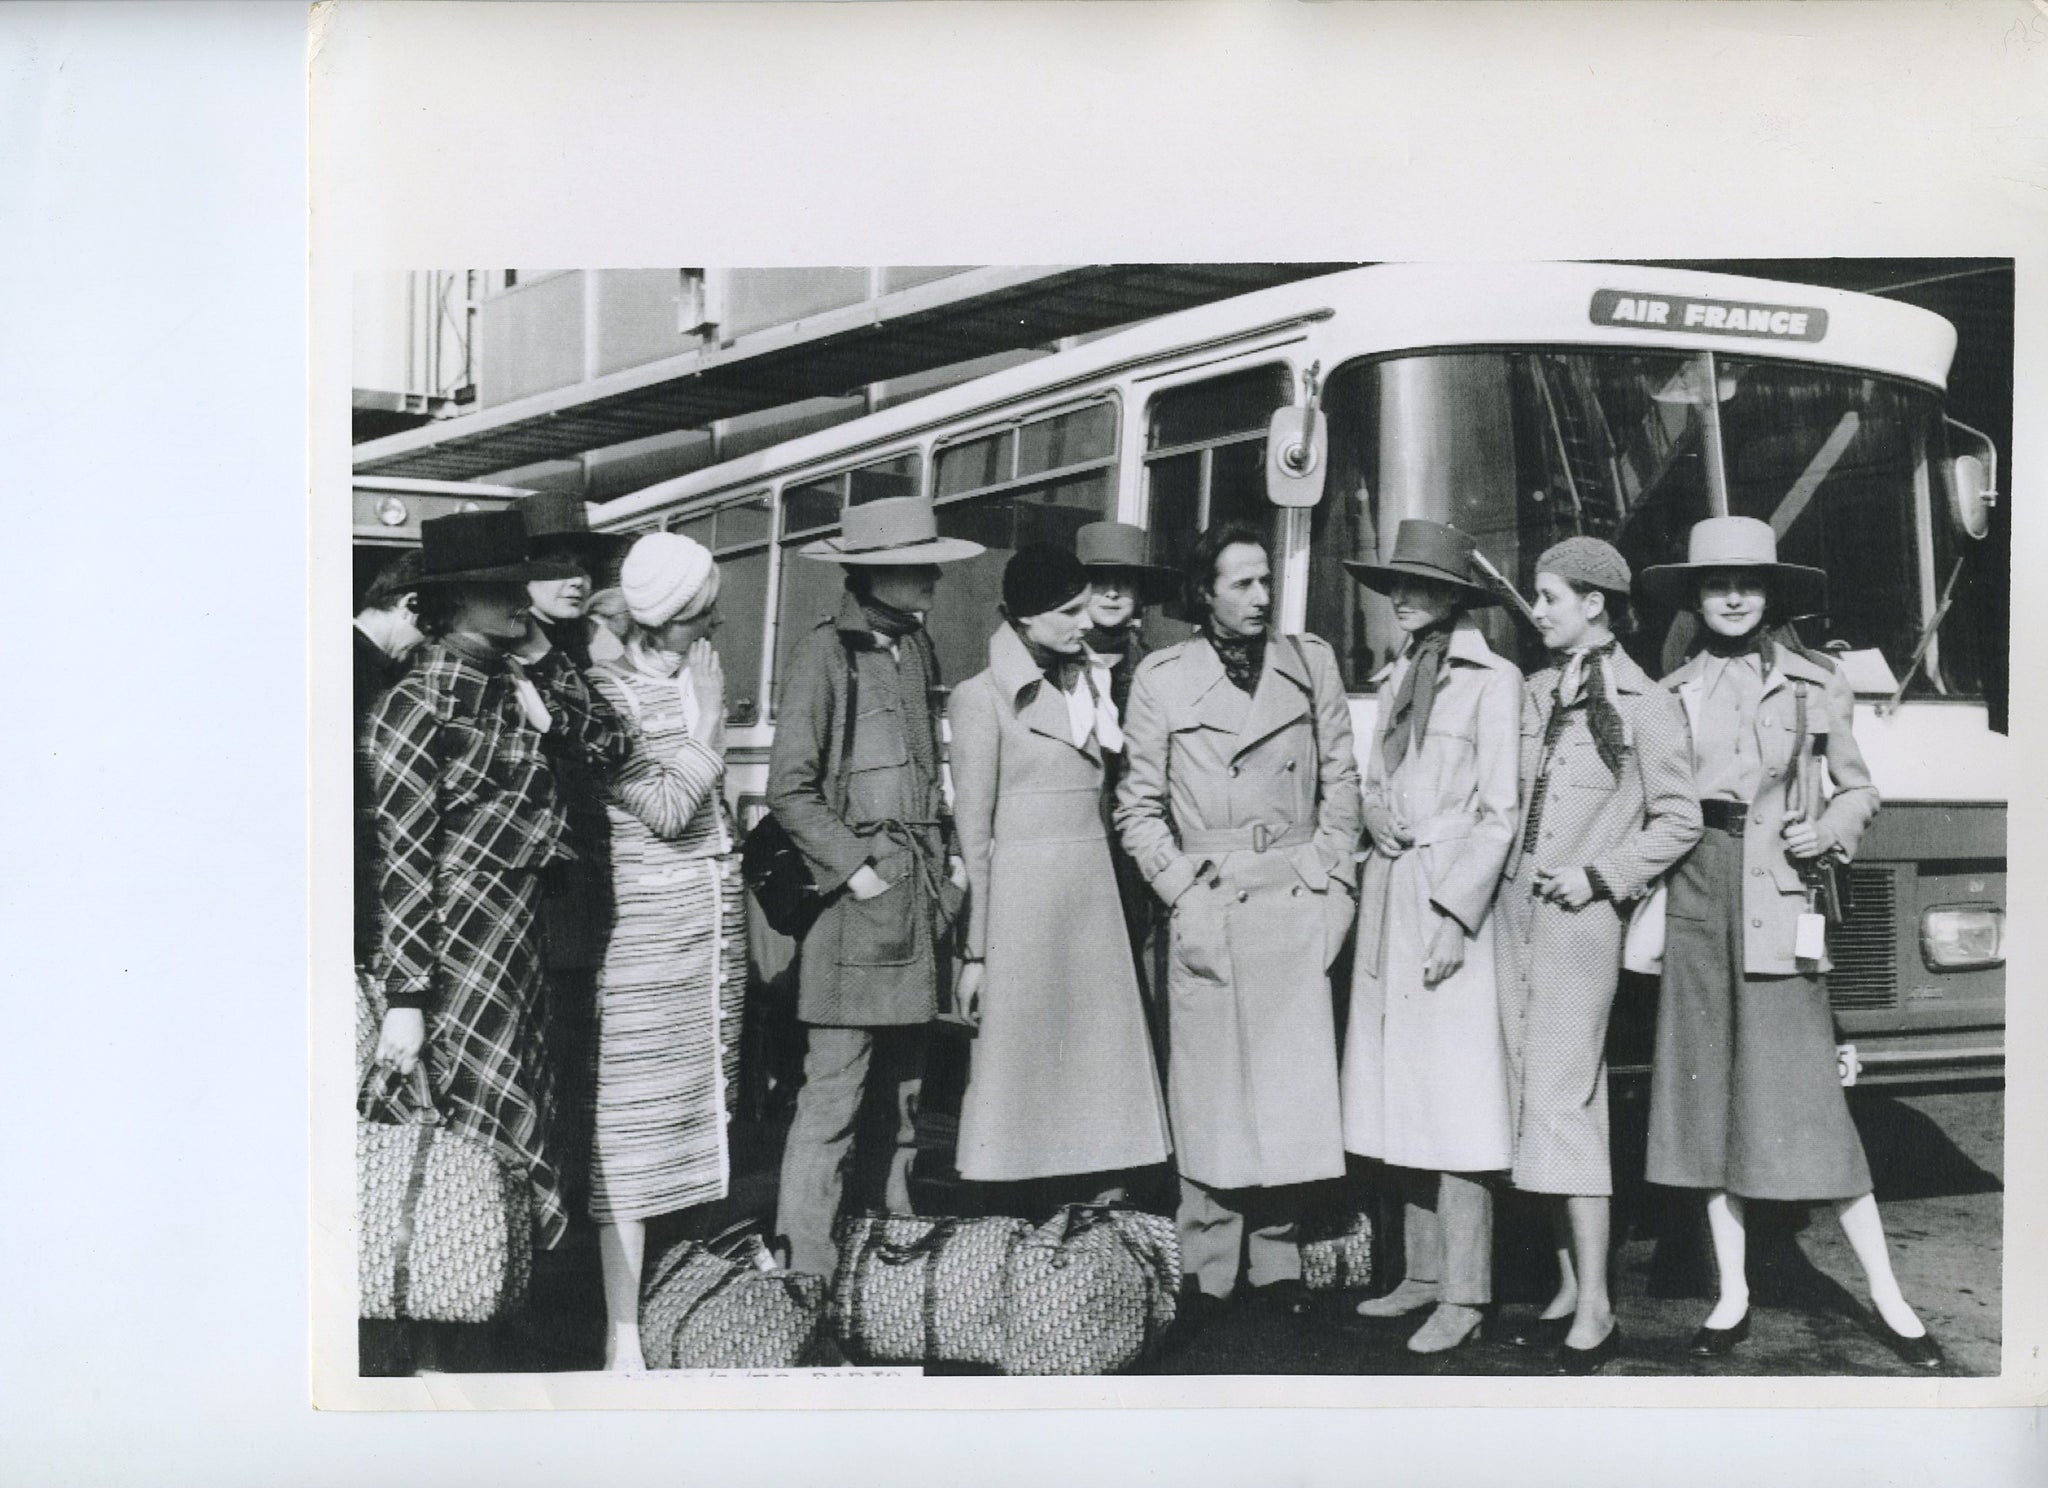 Dior Press photograph at Paris airport with models, 1970